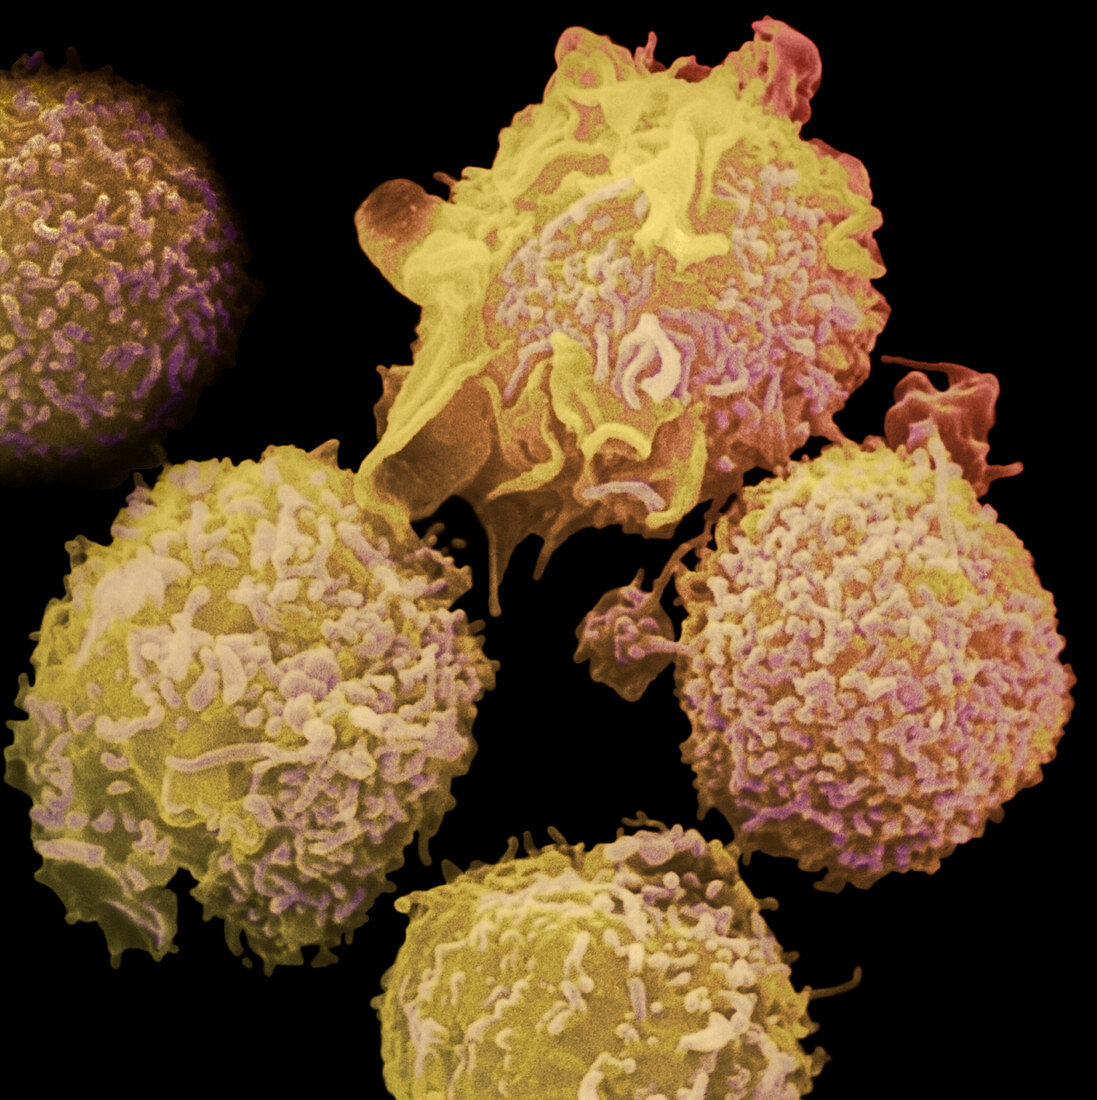 Colour SEM of lymphocytes in hairy cell leukaemia